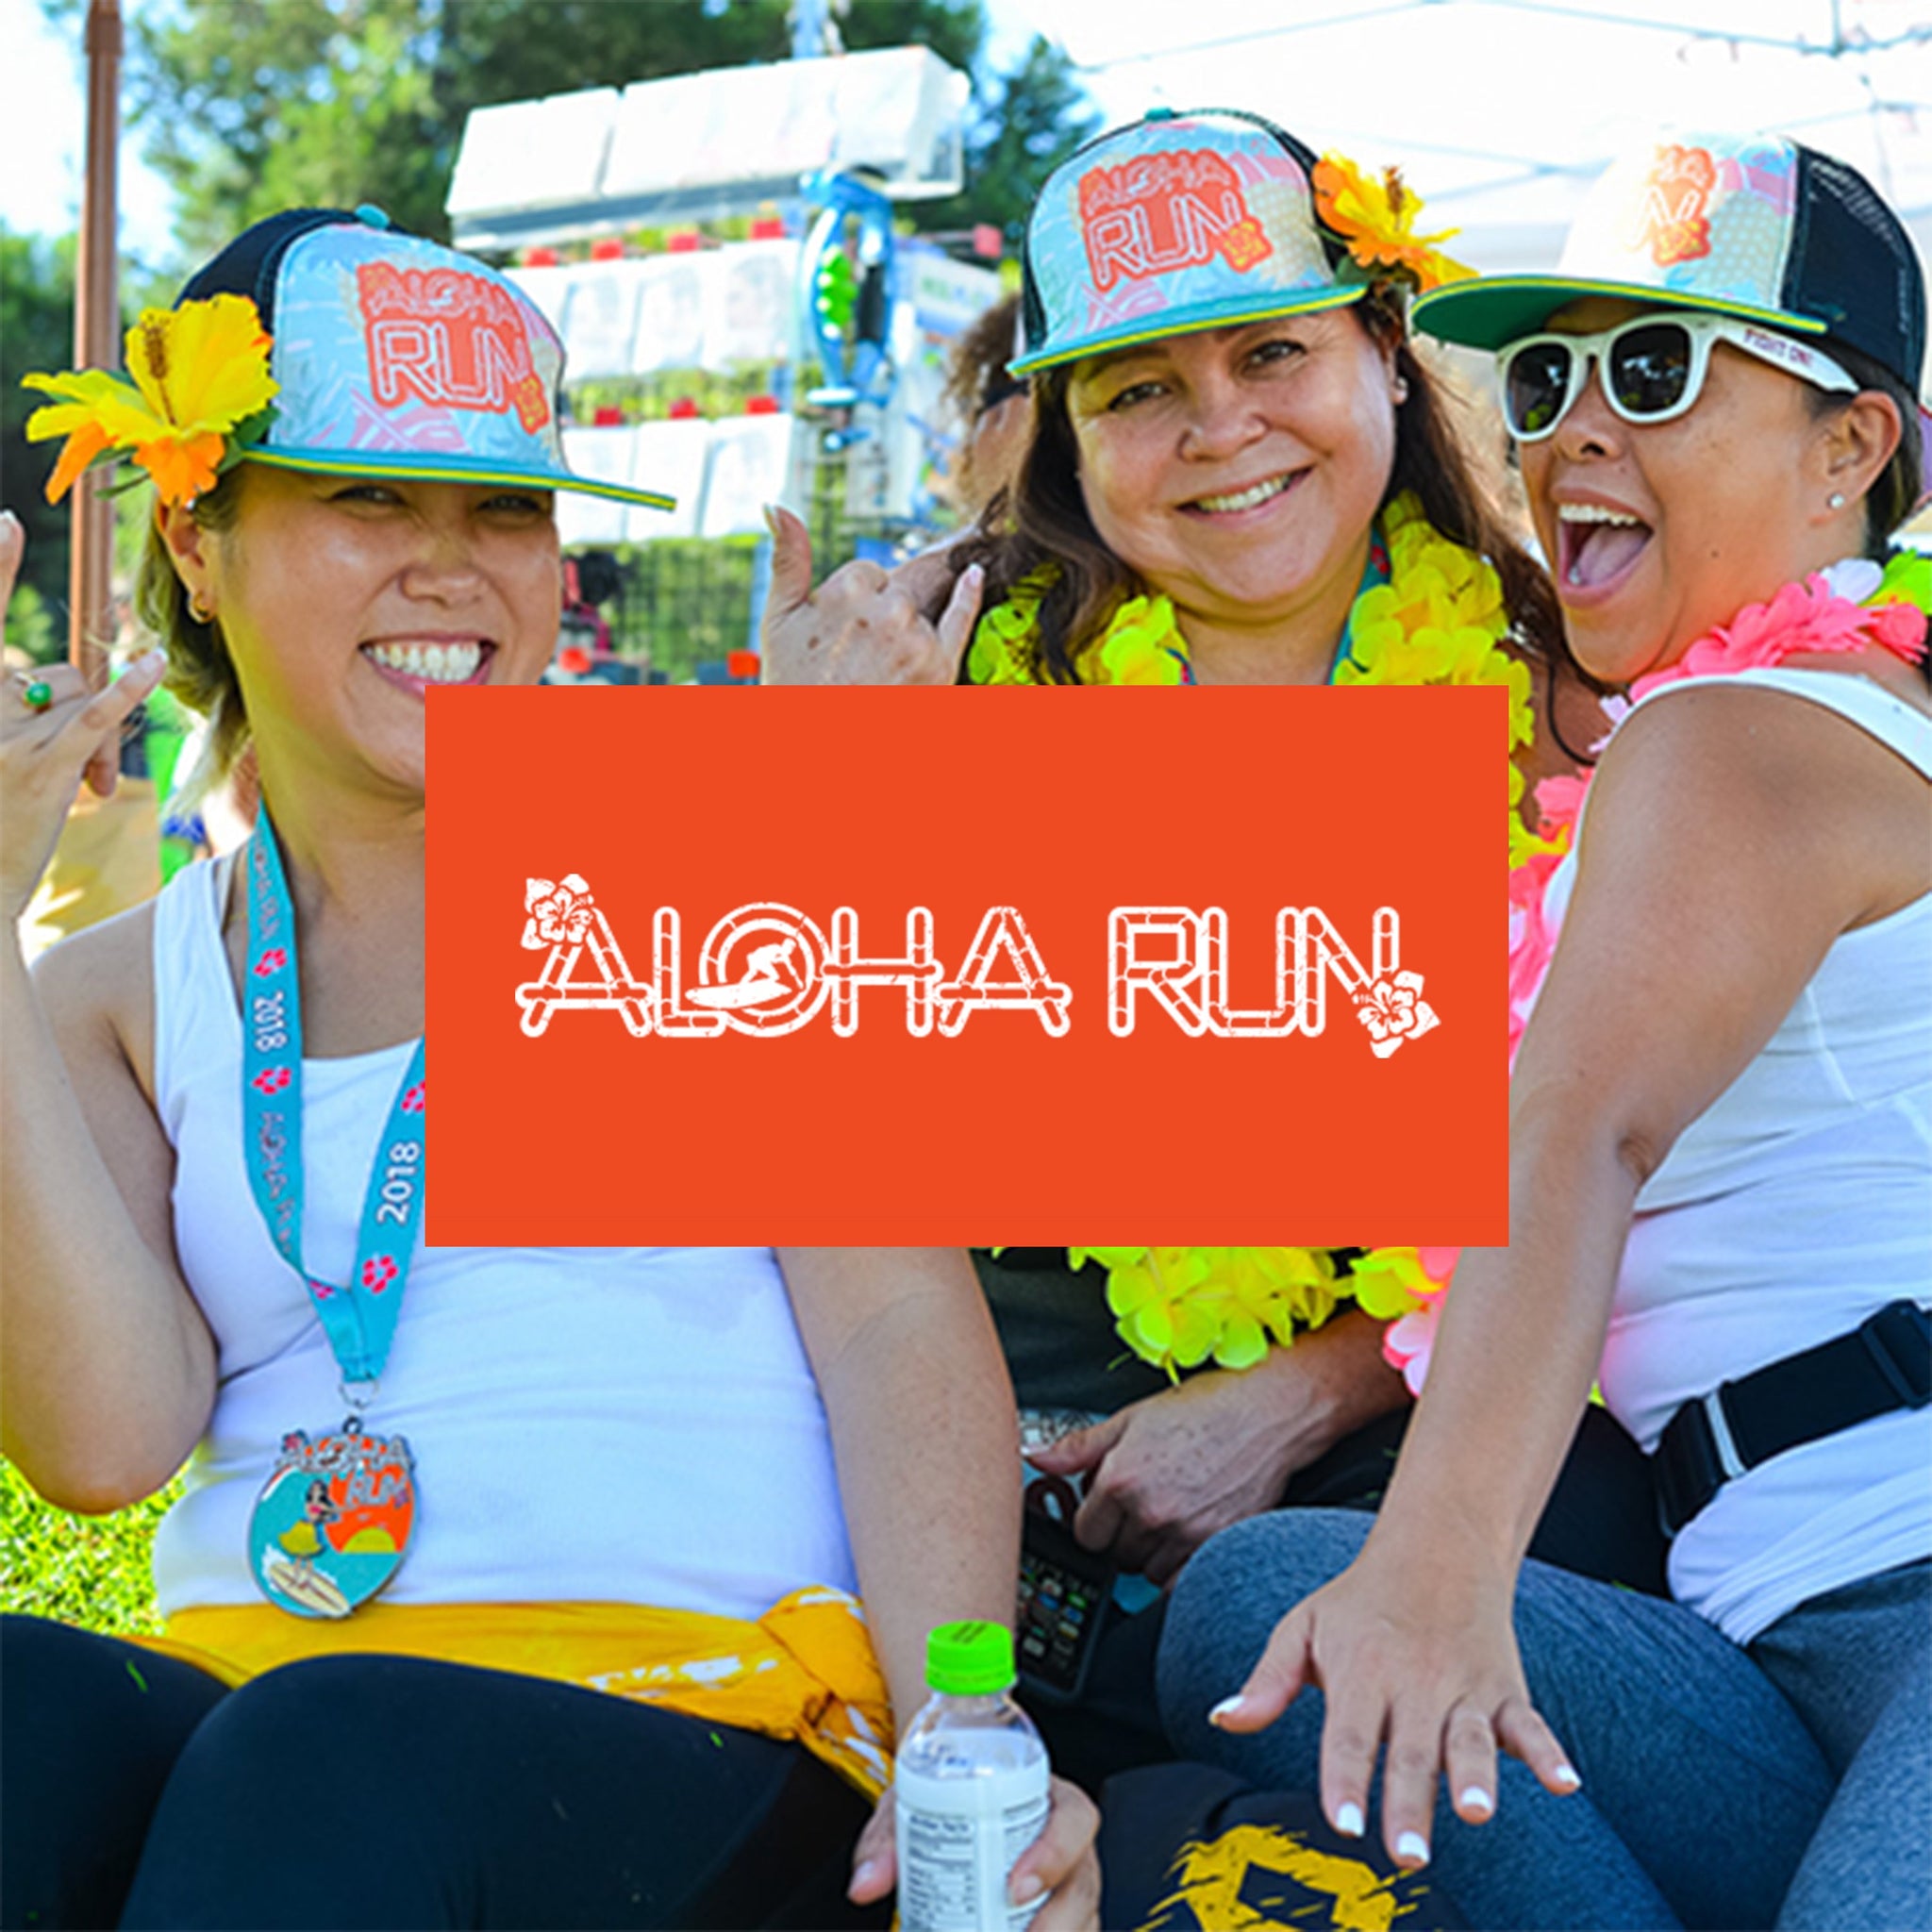 Ultima Official Hydration Sponsor for Aloha Run, 5k, 10k & Marathon